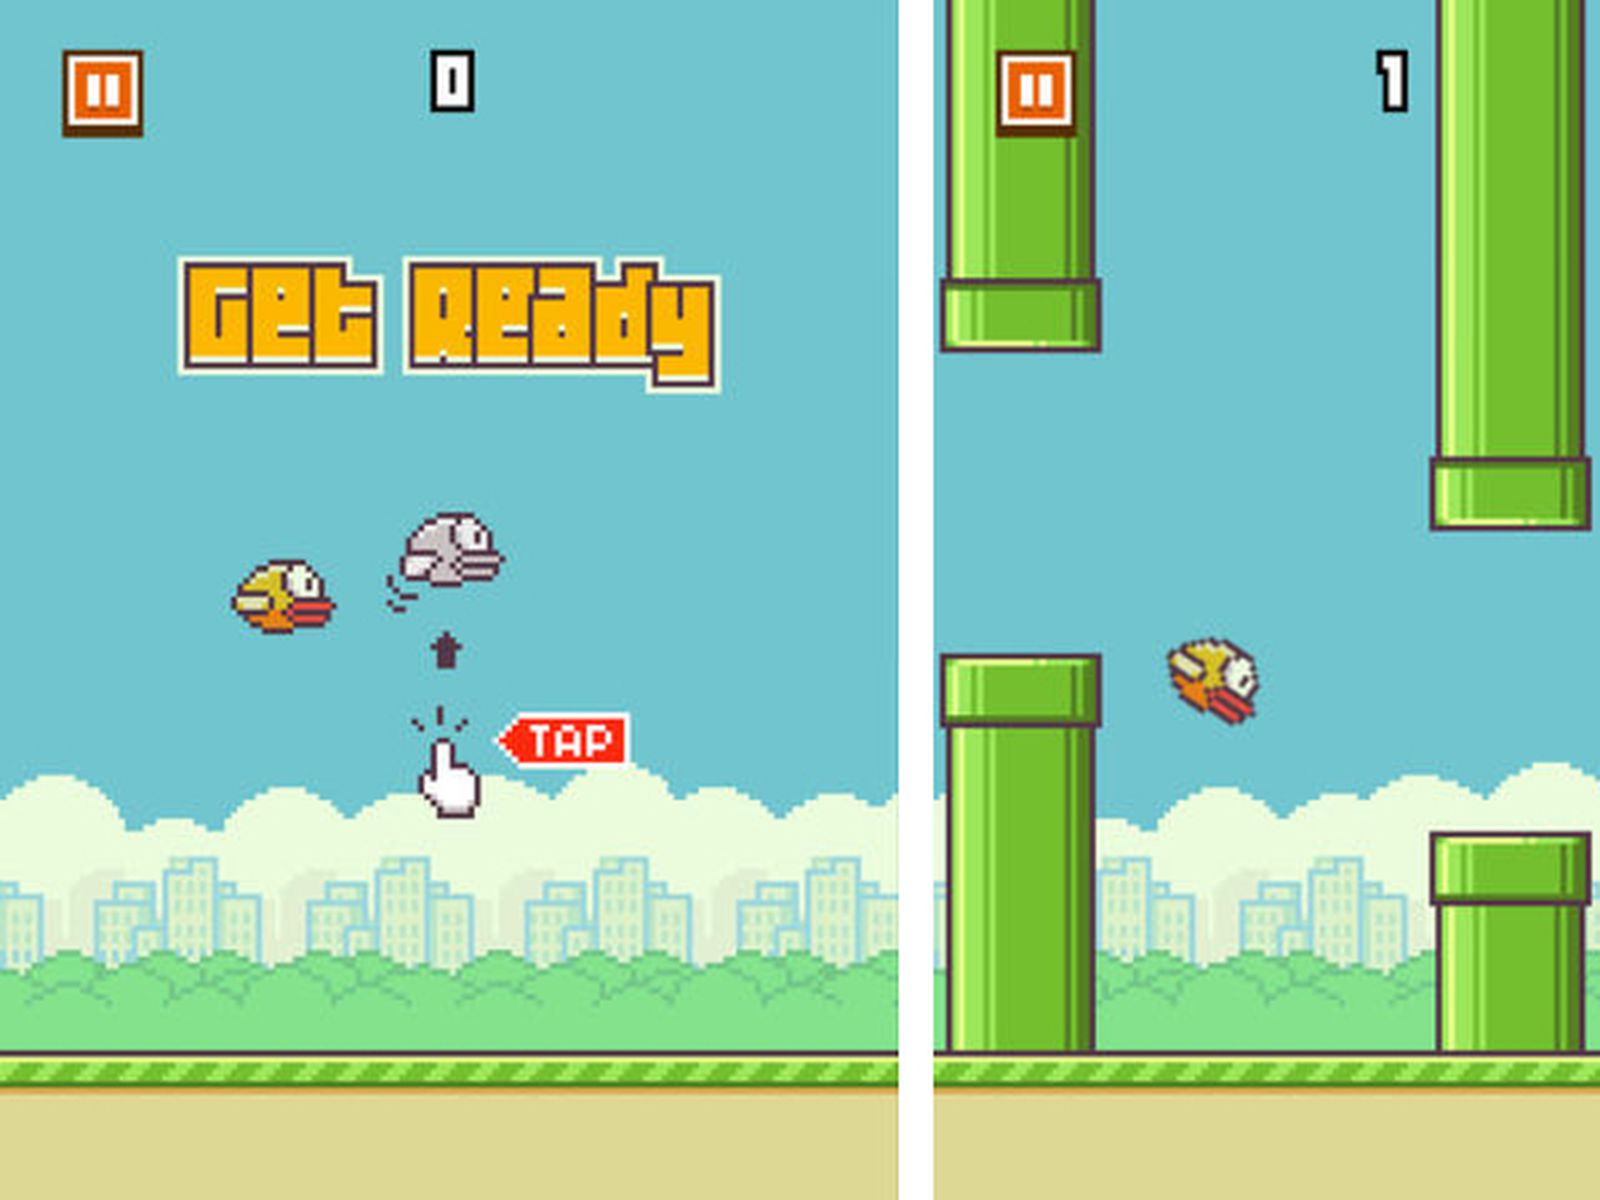 Nintendo denies involvement in mysterious death of 'Flappy Bird